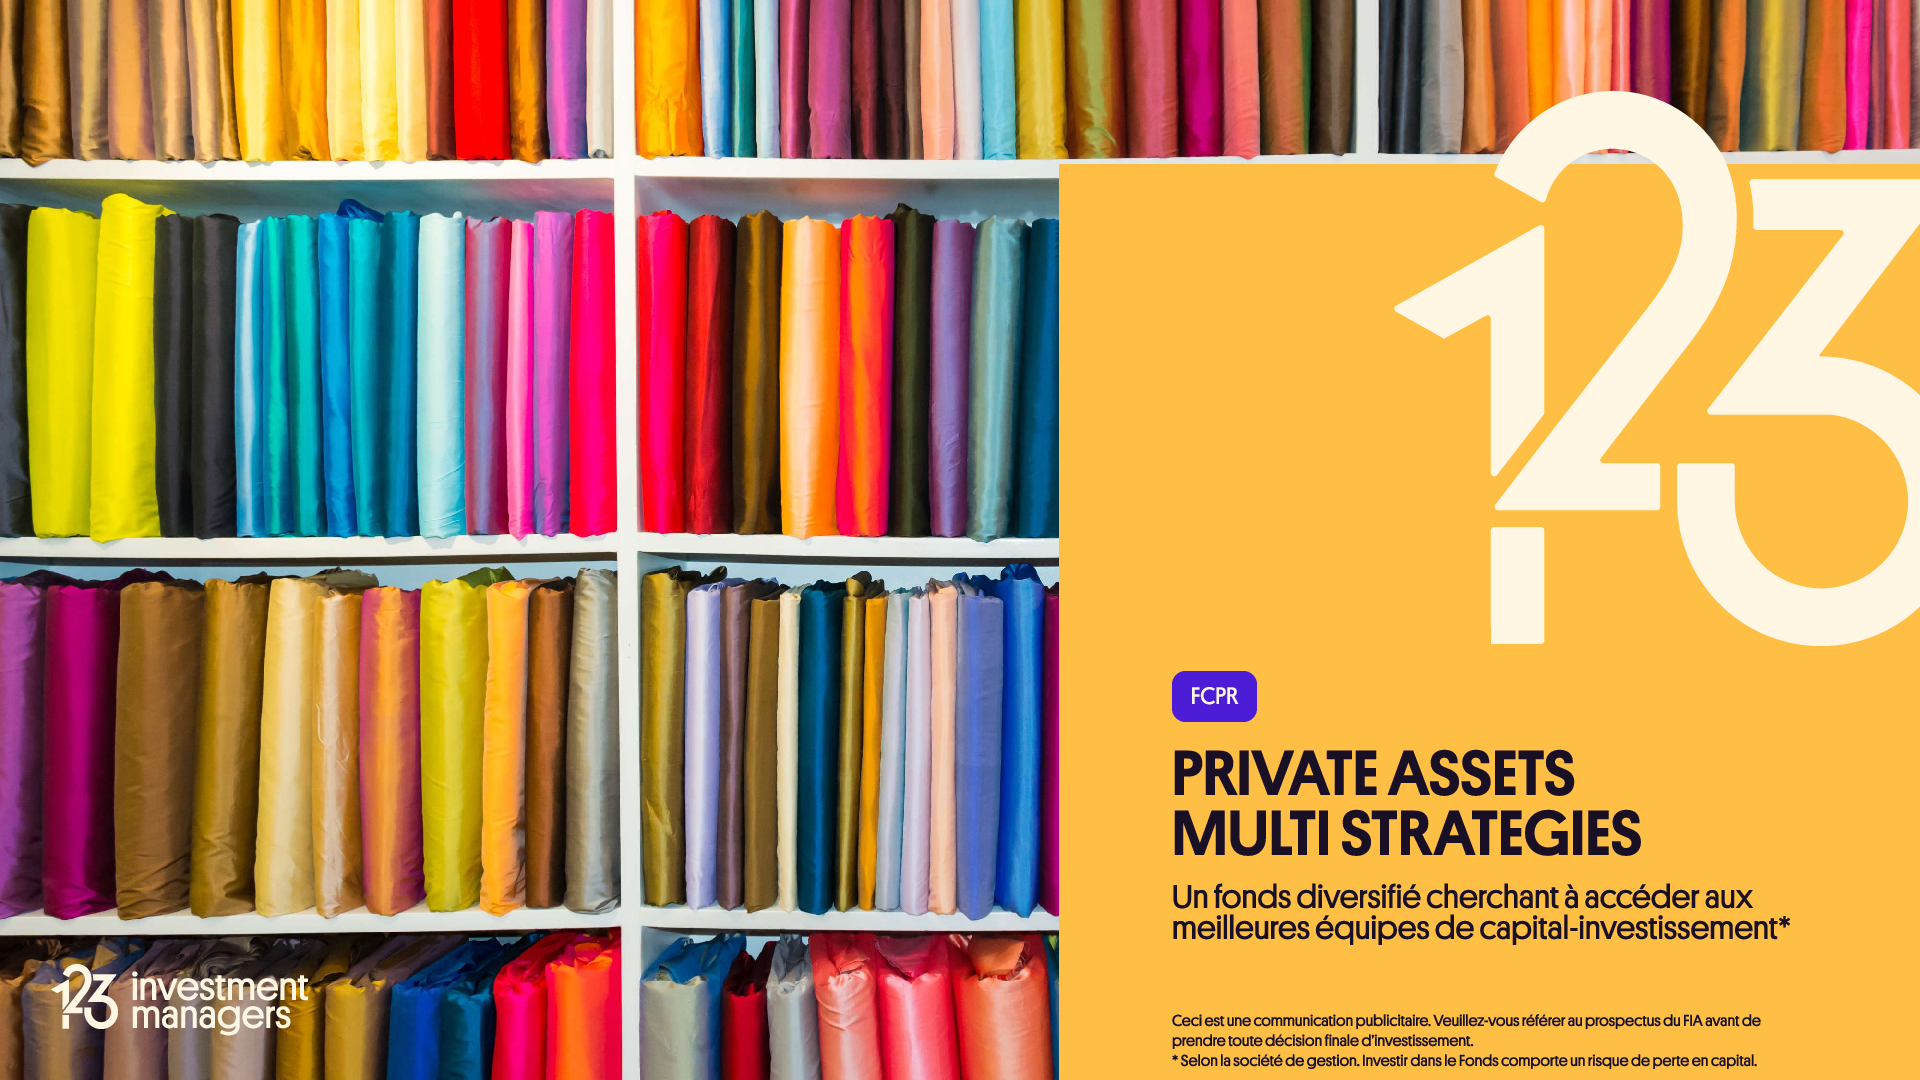 FCPR Private Assets Multi Stratégies (FR001400CJW0)